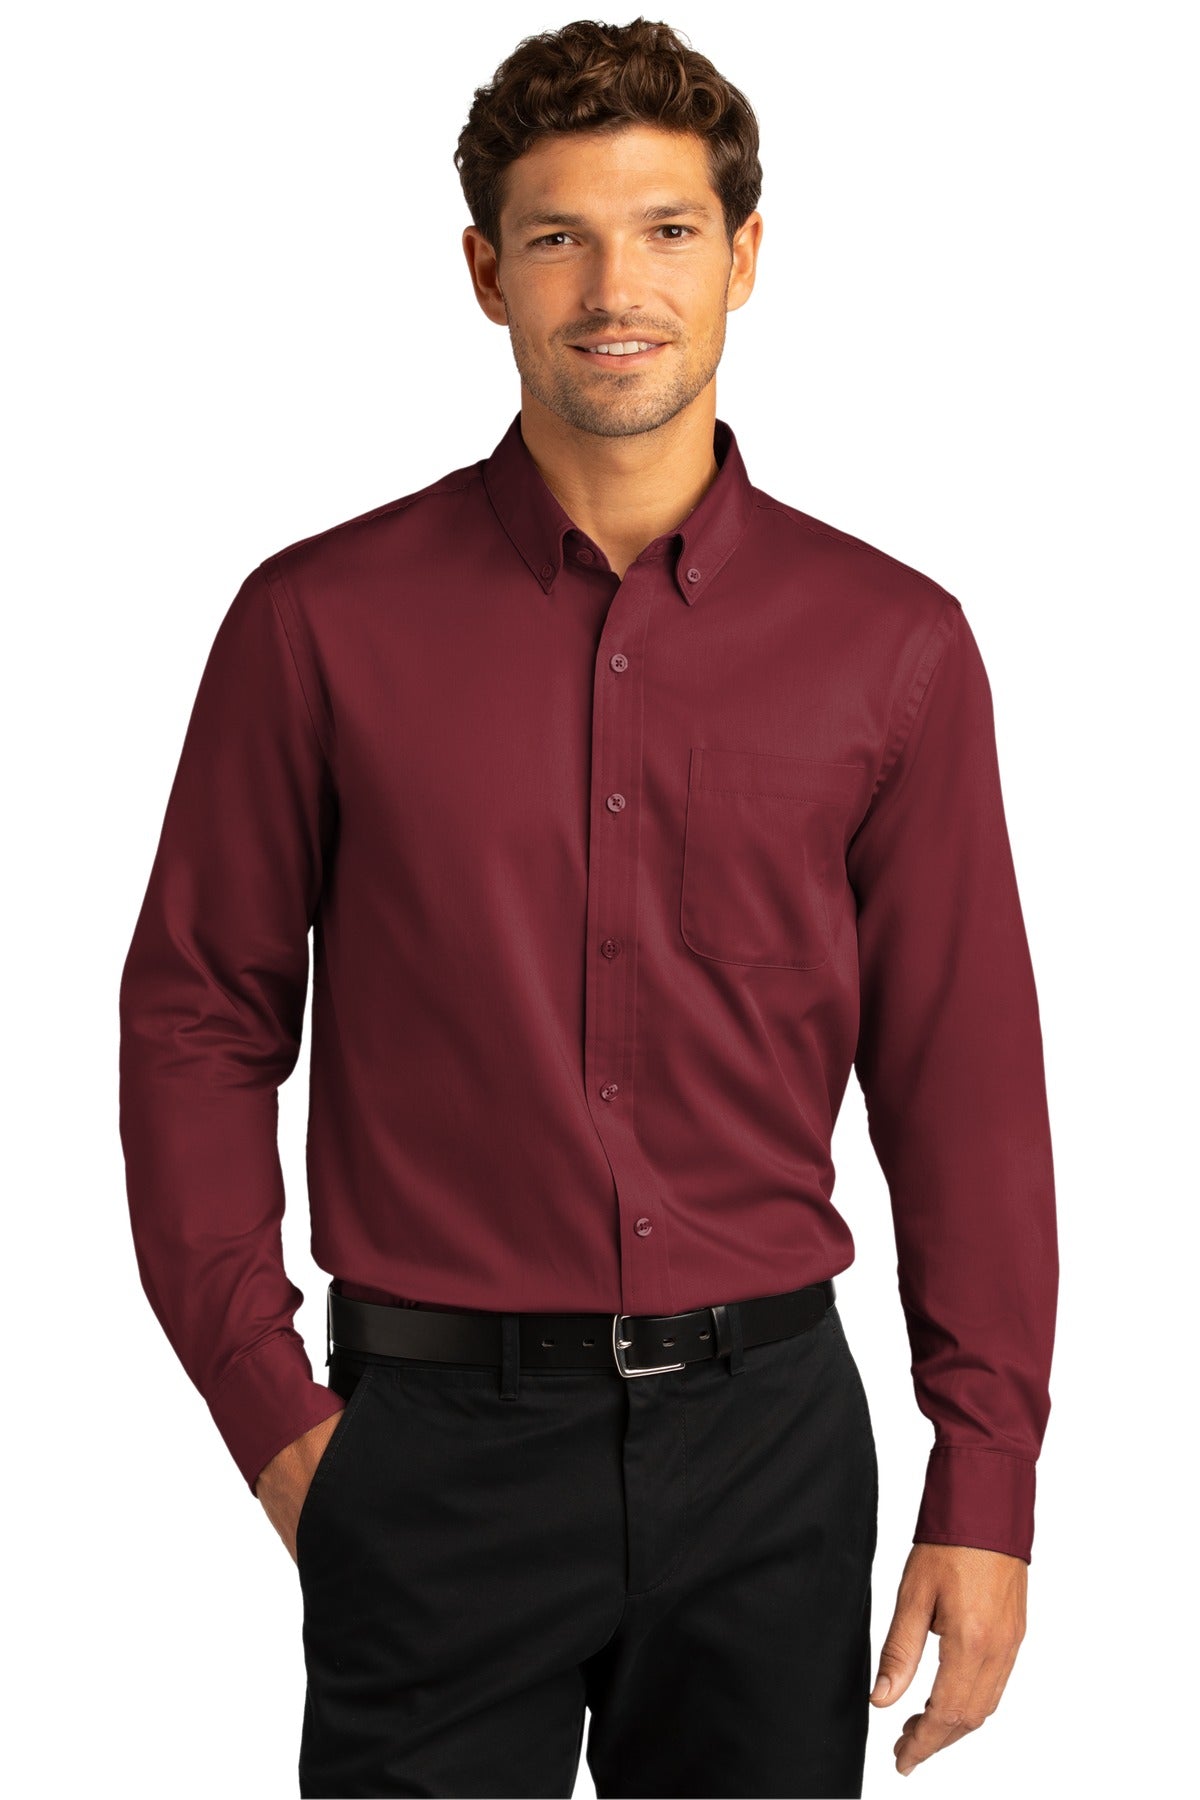 Port Authority® Long Sleeve SuperPro React™ Twill Shirt. W808 [Burgundy] - DFW Impression